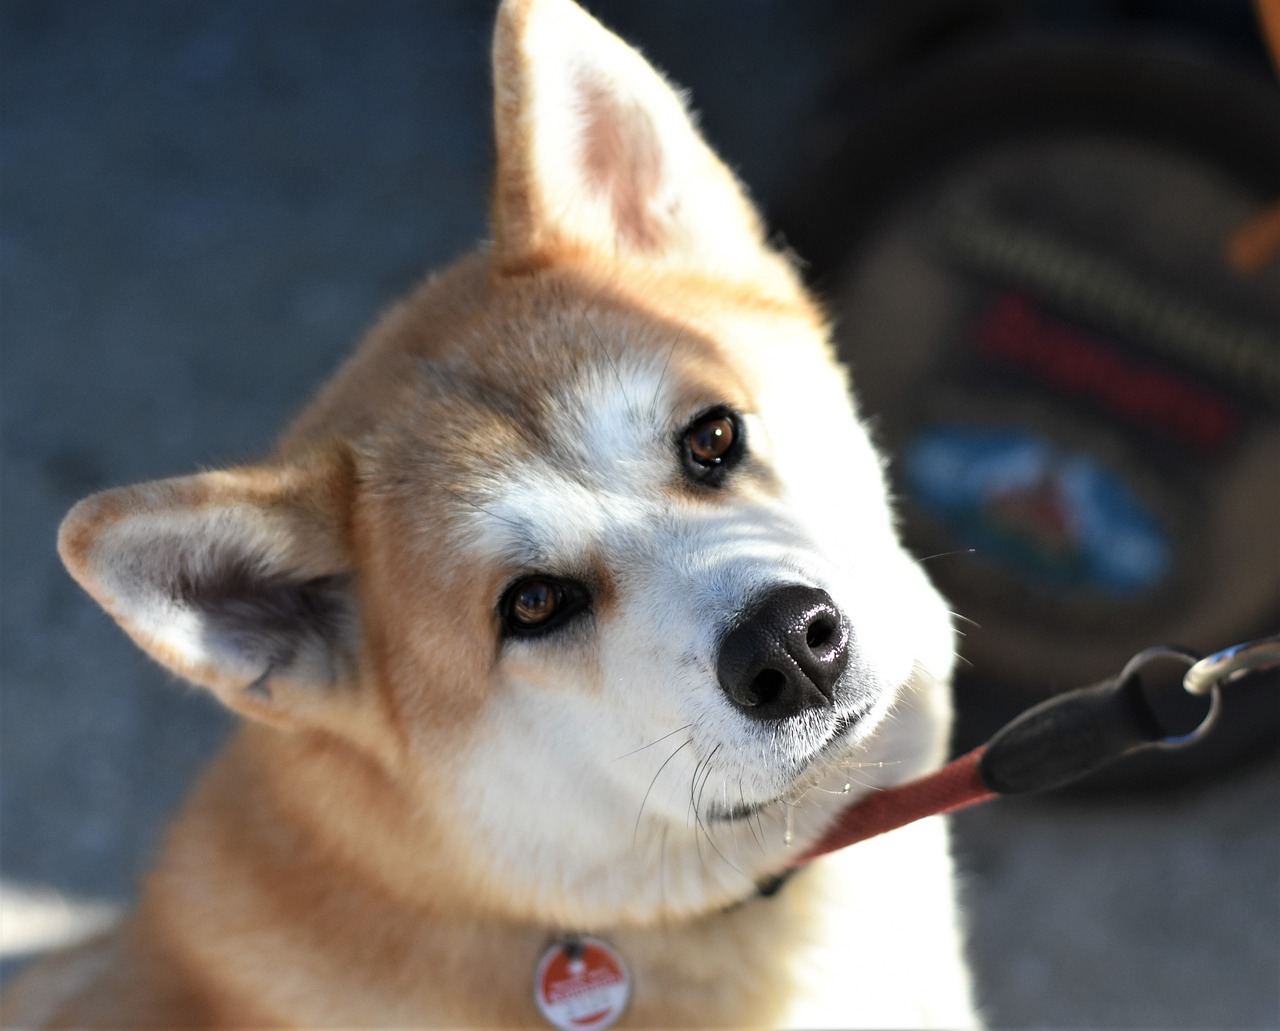 Should I Let My Dog Destroy His Toys? - SpiritDog Training